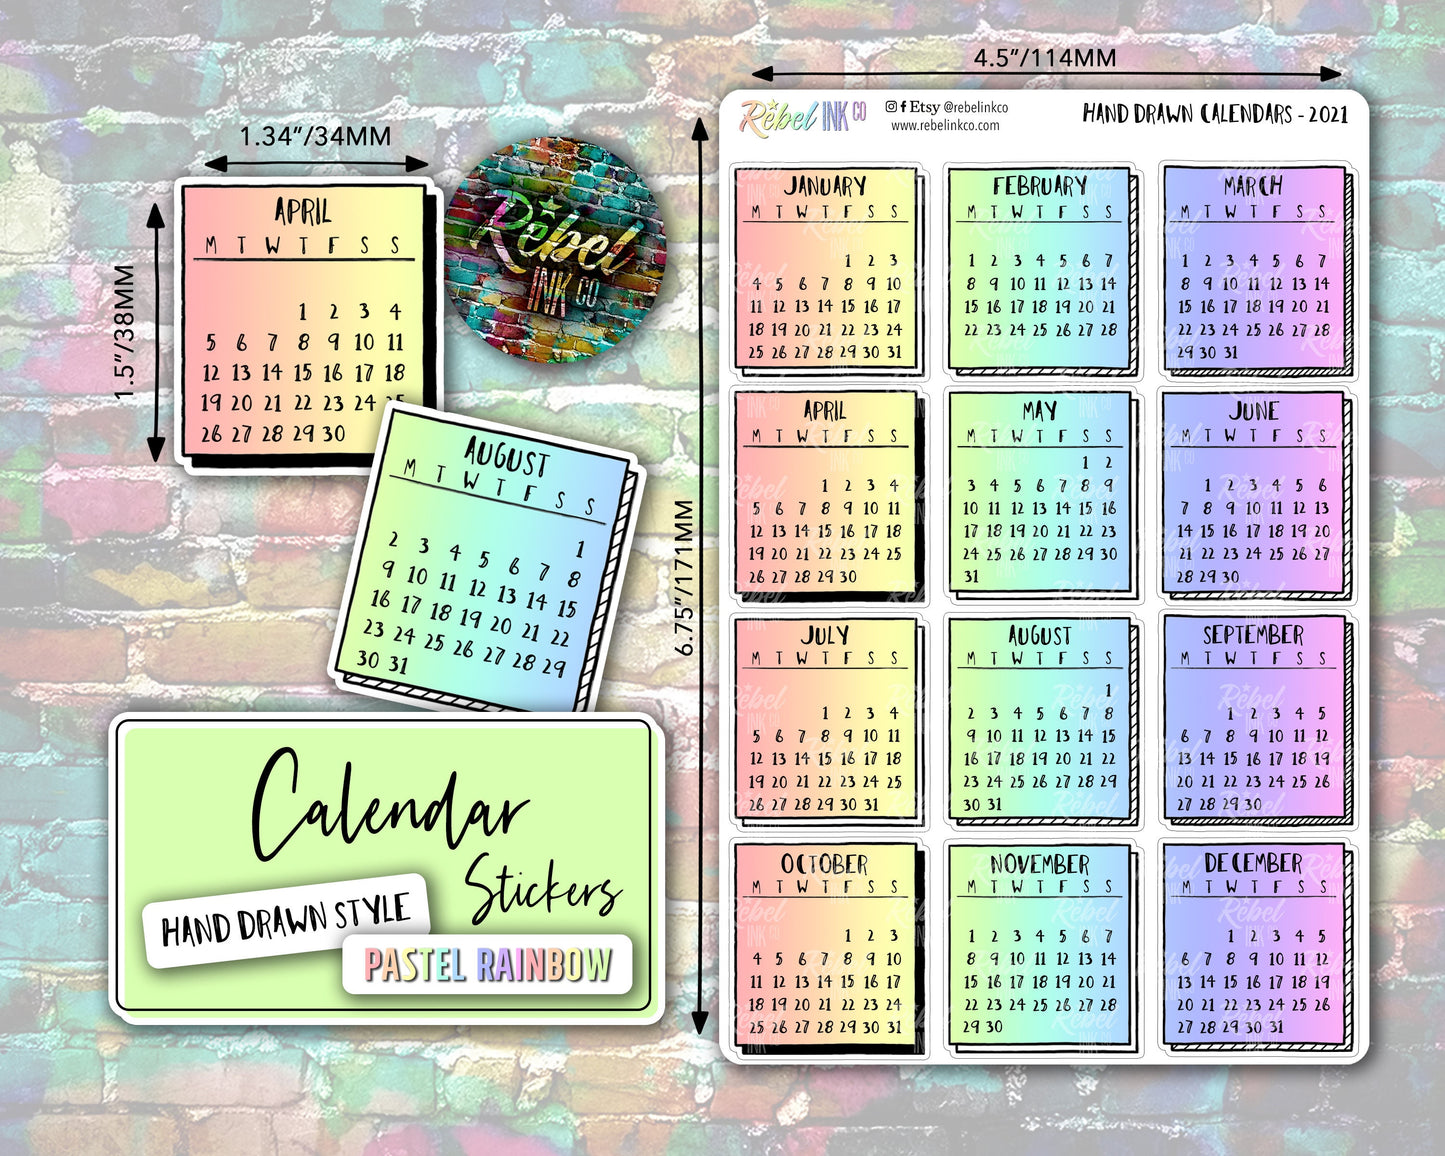 Calendar Stickers - Pastel Rainbow - Hand Drawn Style